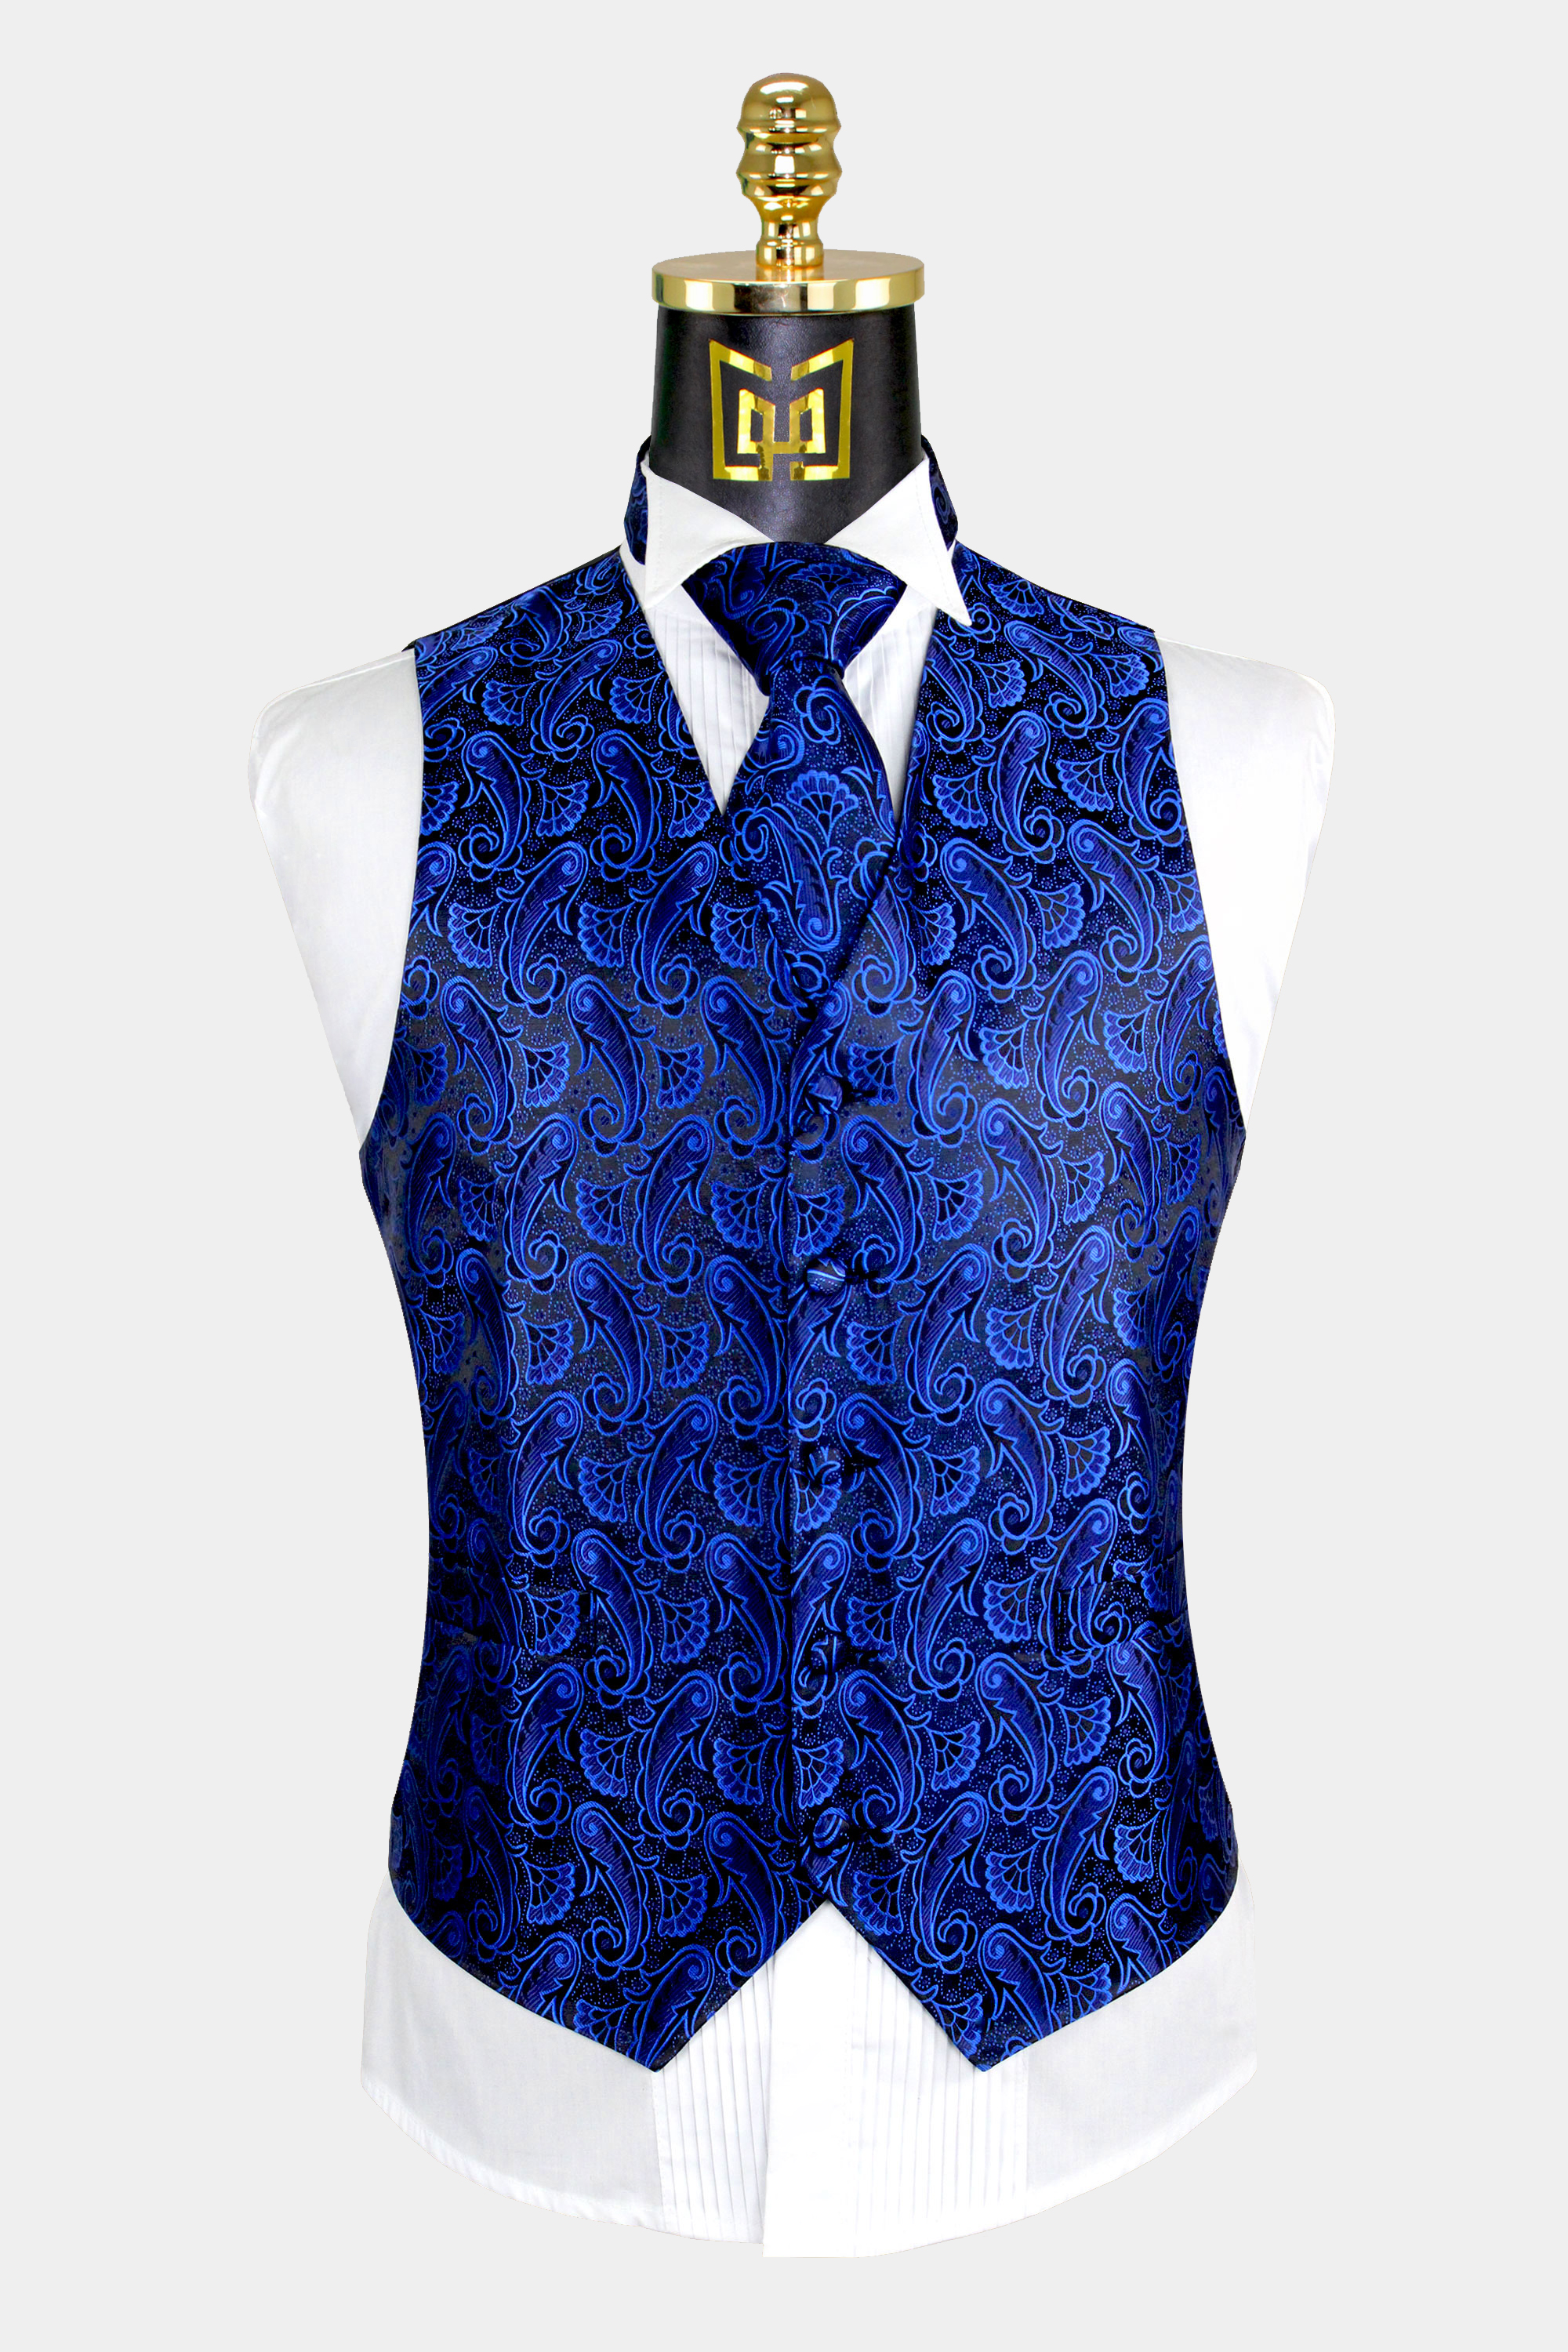 Royal-Blue-and-Black-Paisley-Vest-and-Tie-Groom-Wedding-Tuxedo-Vest-Waistcoat-from-Genbtlemansguru.com_